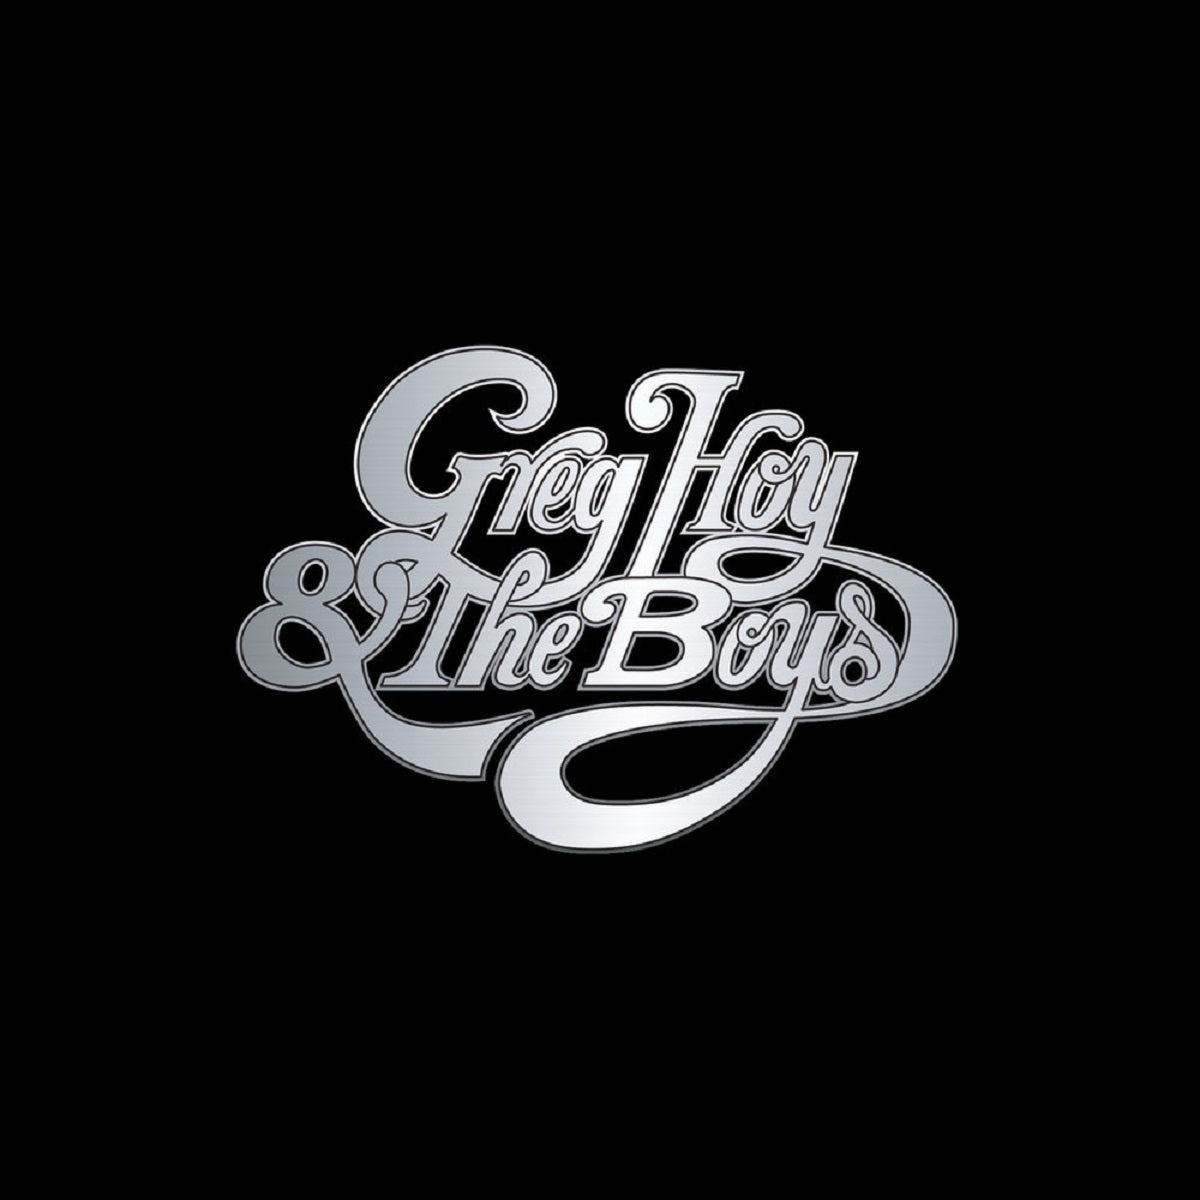 Greg Hoy & The Boys – ‘Brilliant Jerk’